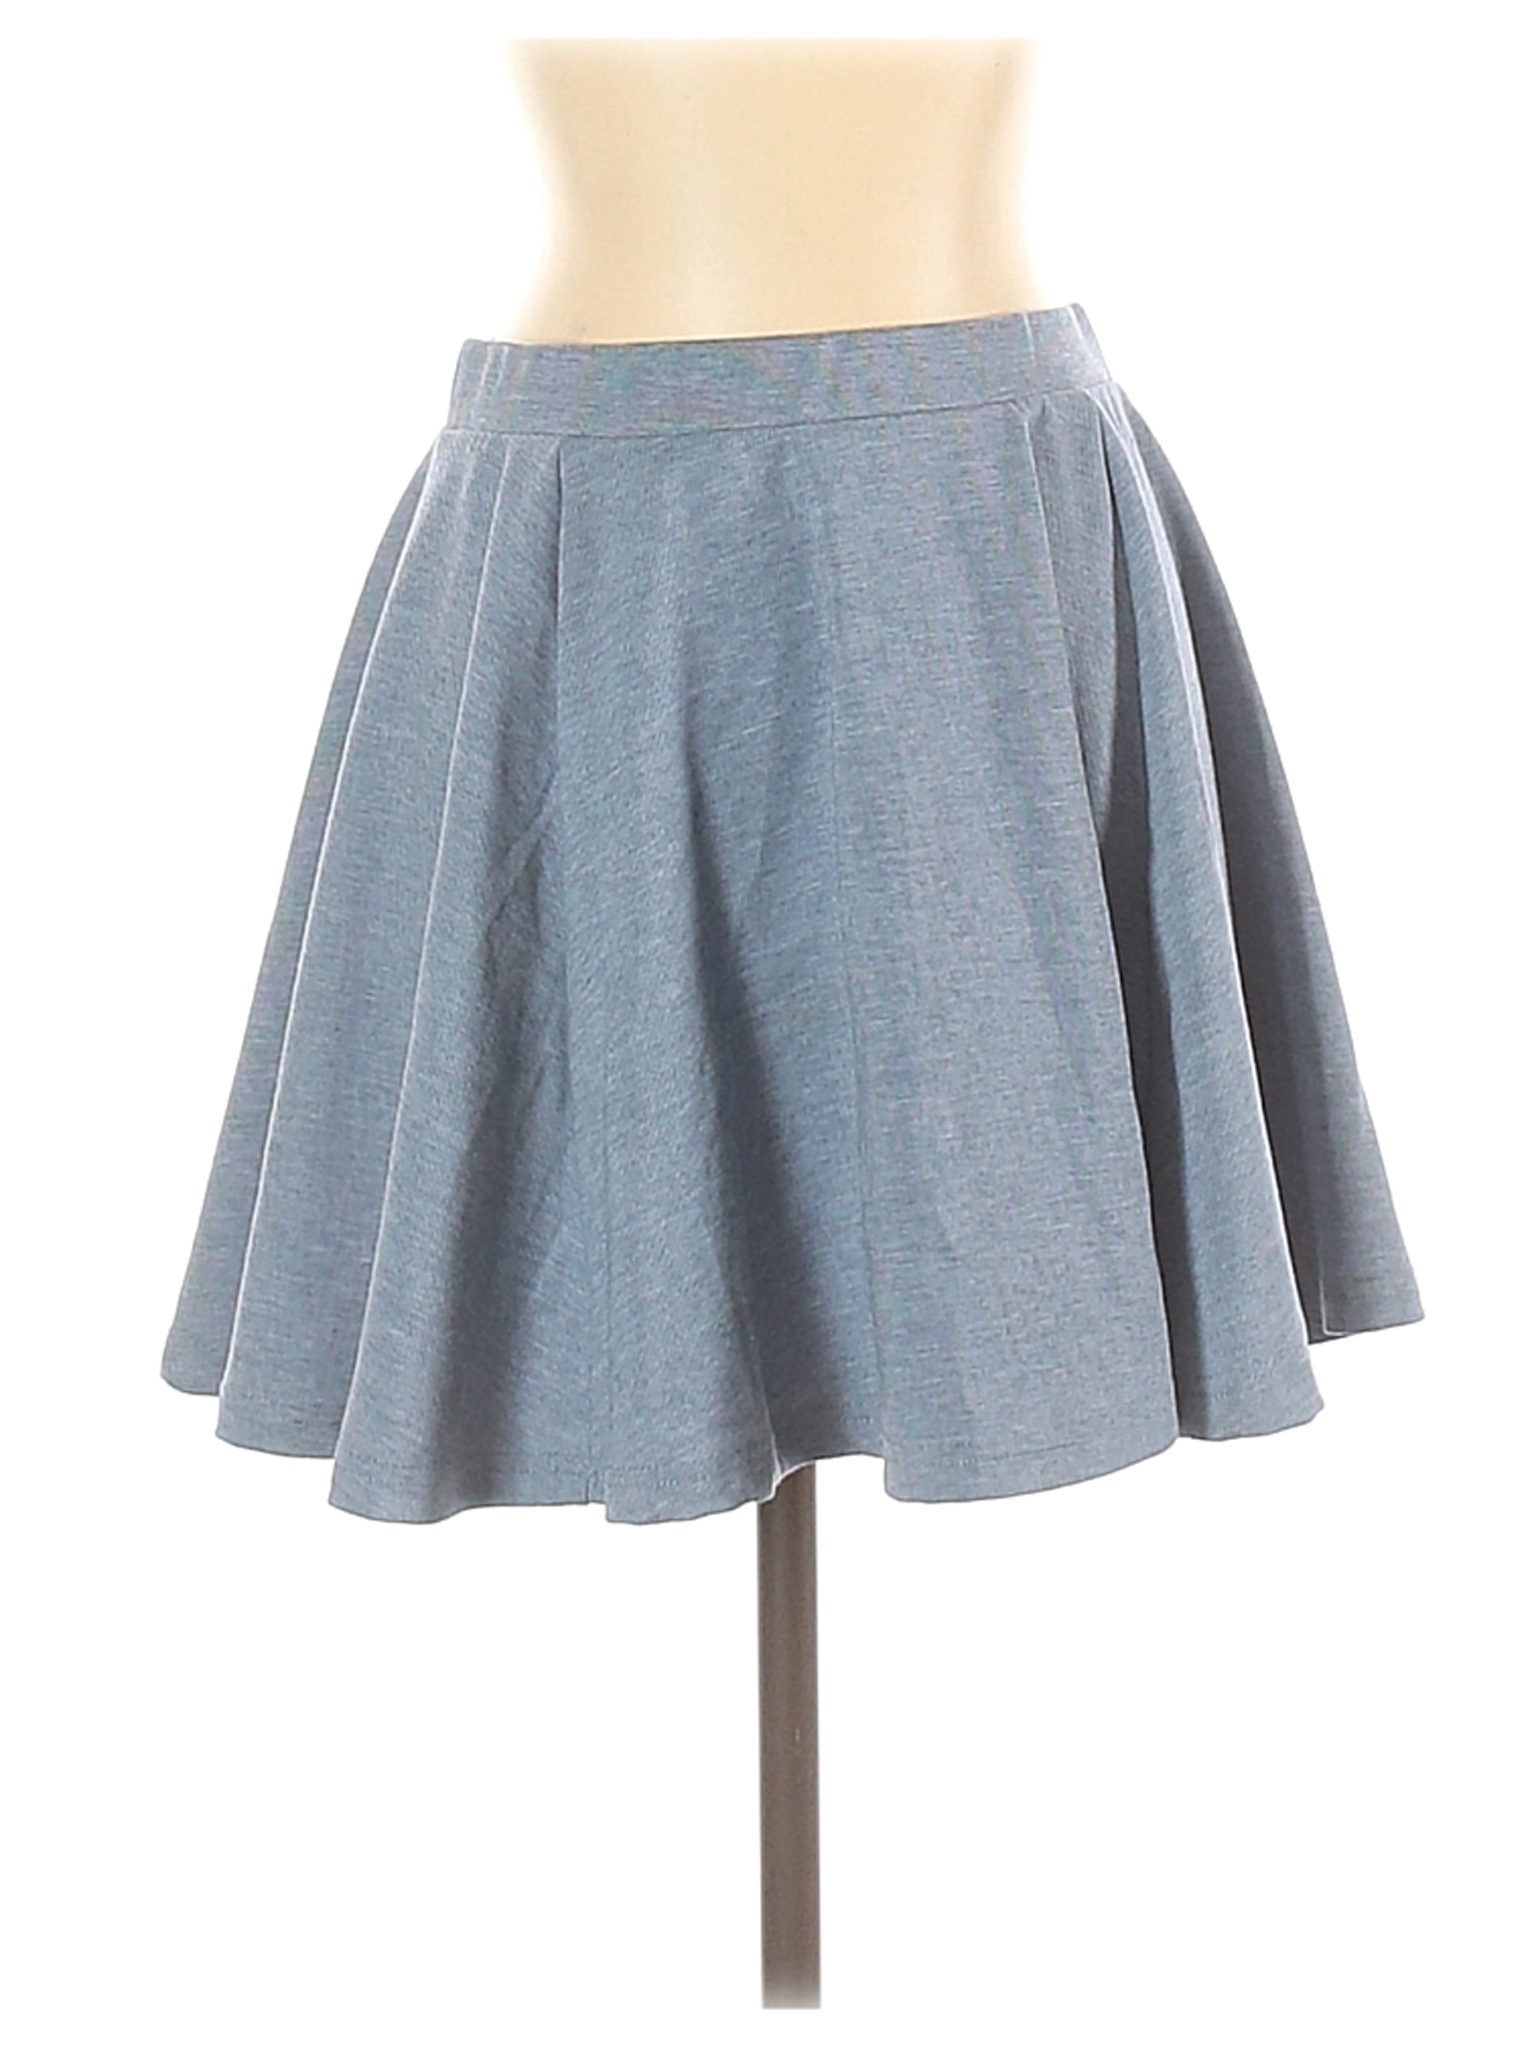 Cotton On Women Blue Casual Skirt S | eBay